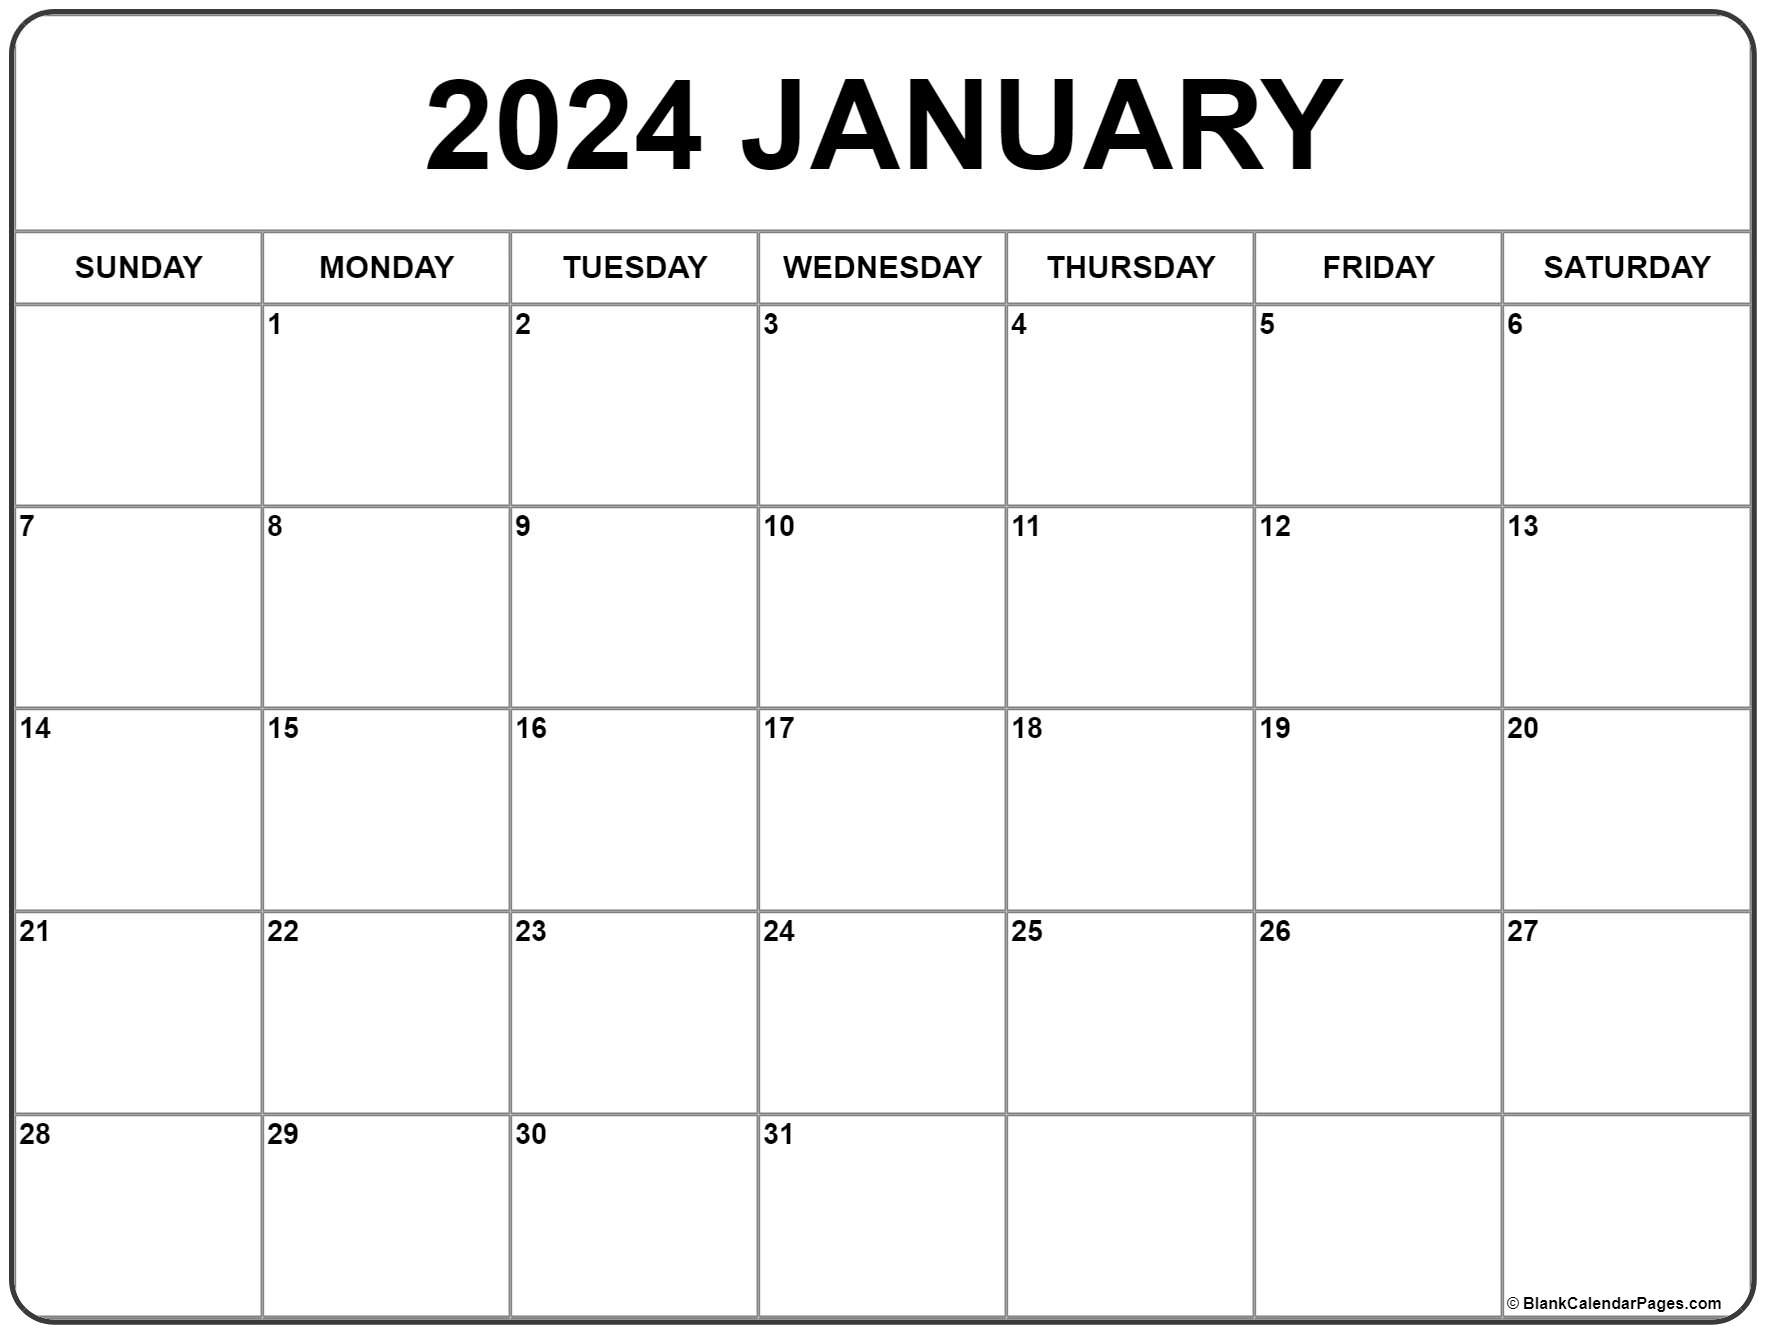 January 2024 Calendar | Free Printable Calendar for 2024 January Calendar Printable